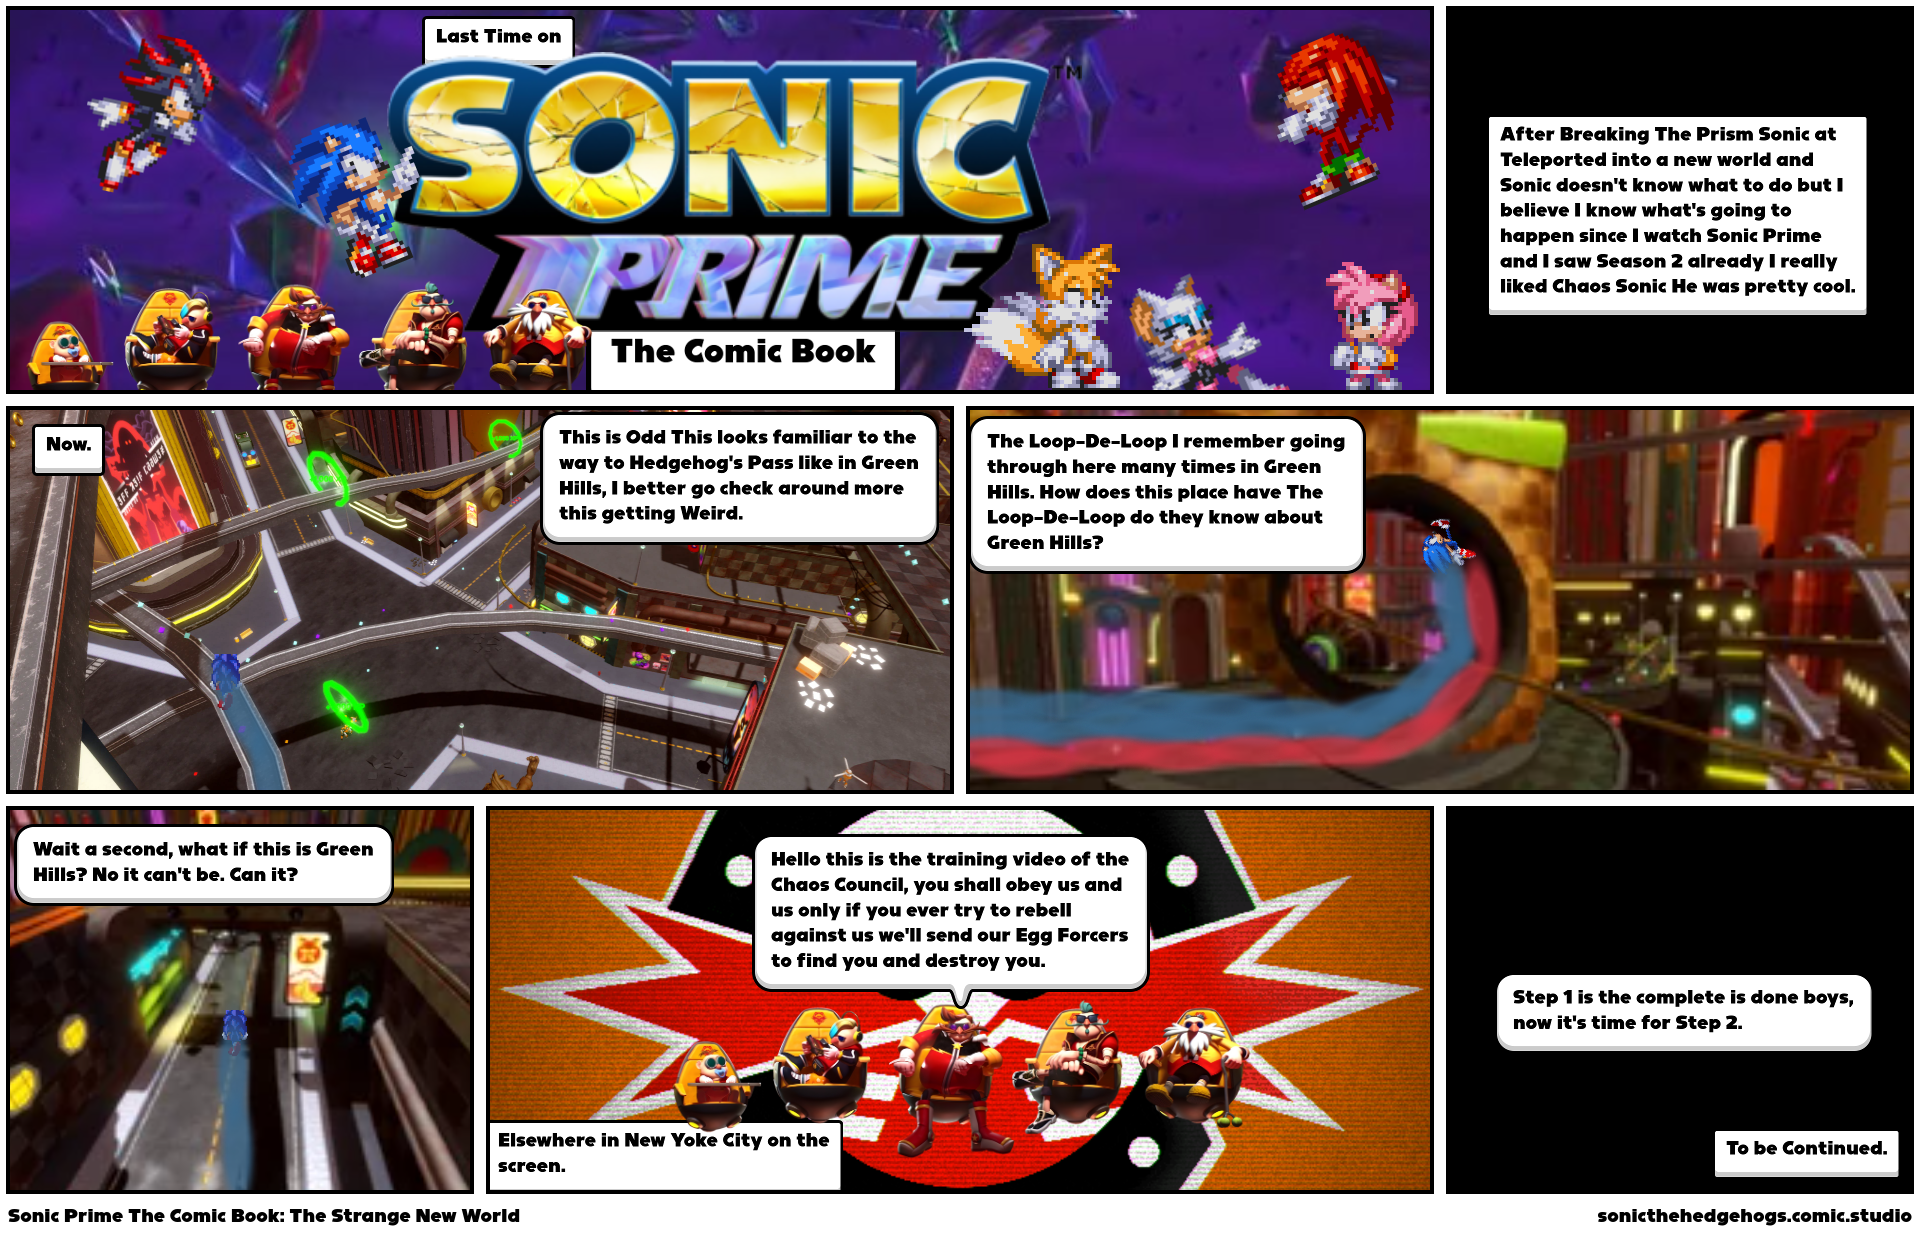 Sonic Prime The Comic Book: The Strange New World